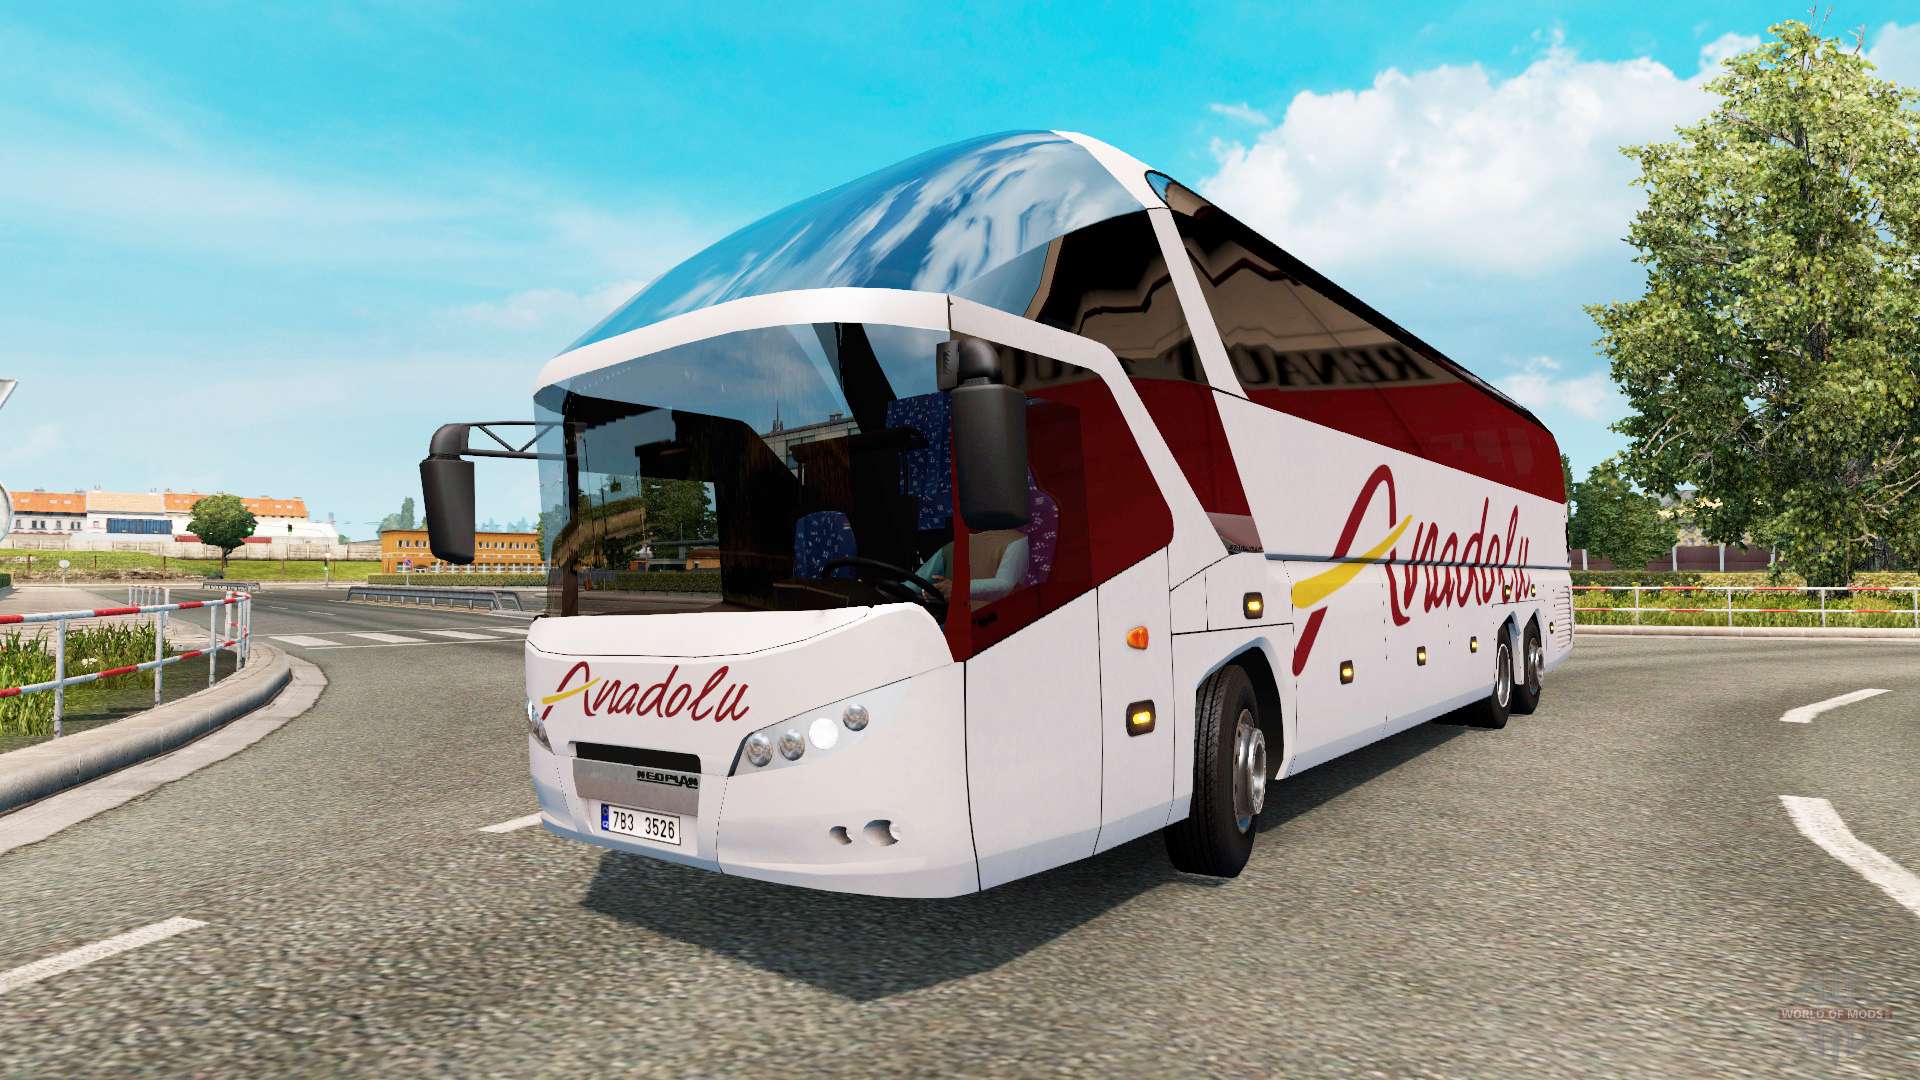 euro truck simulator 3 bus